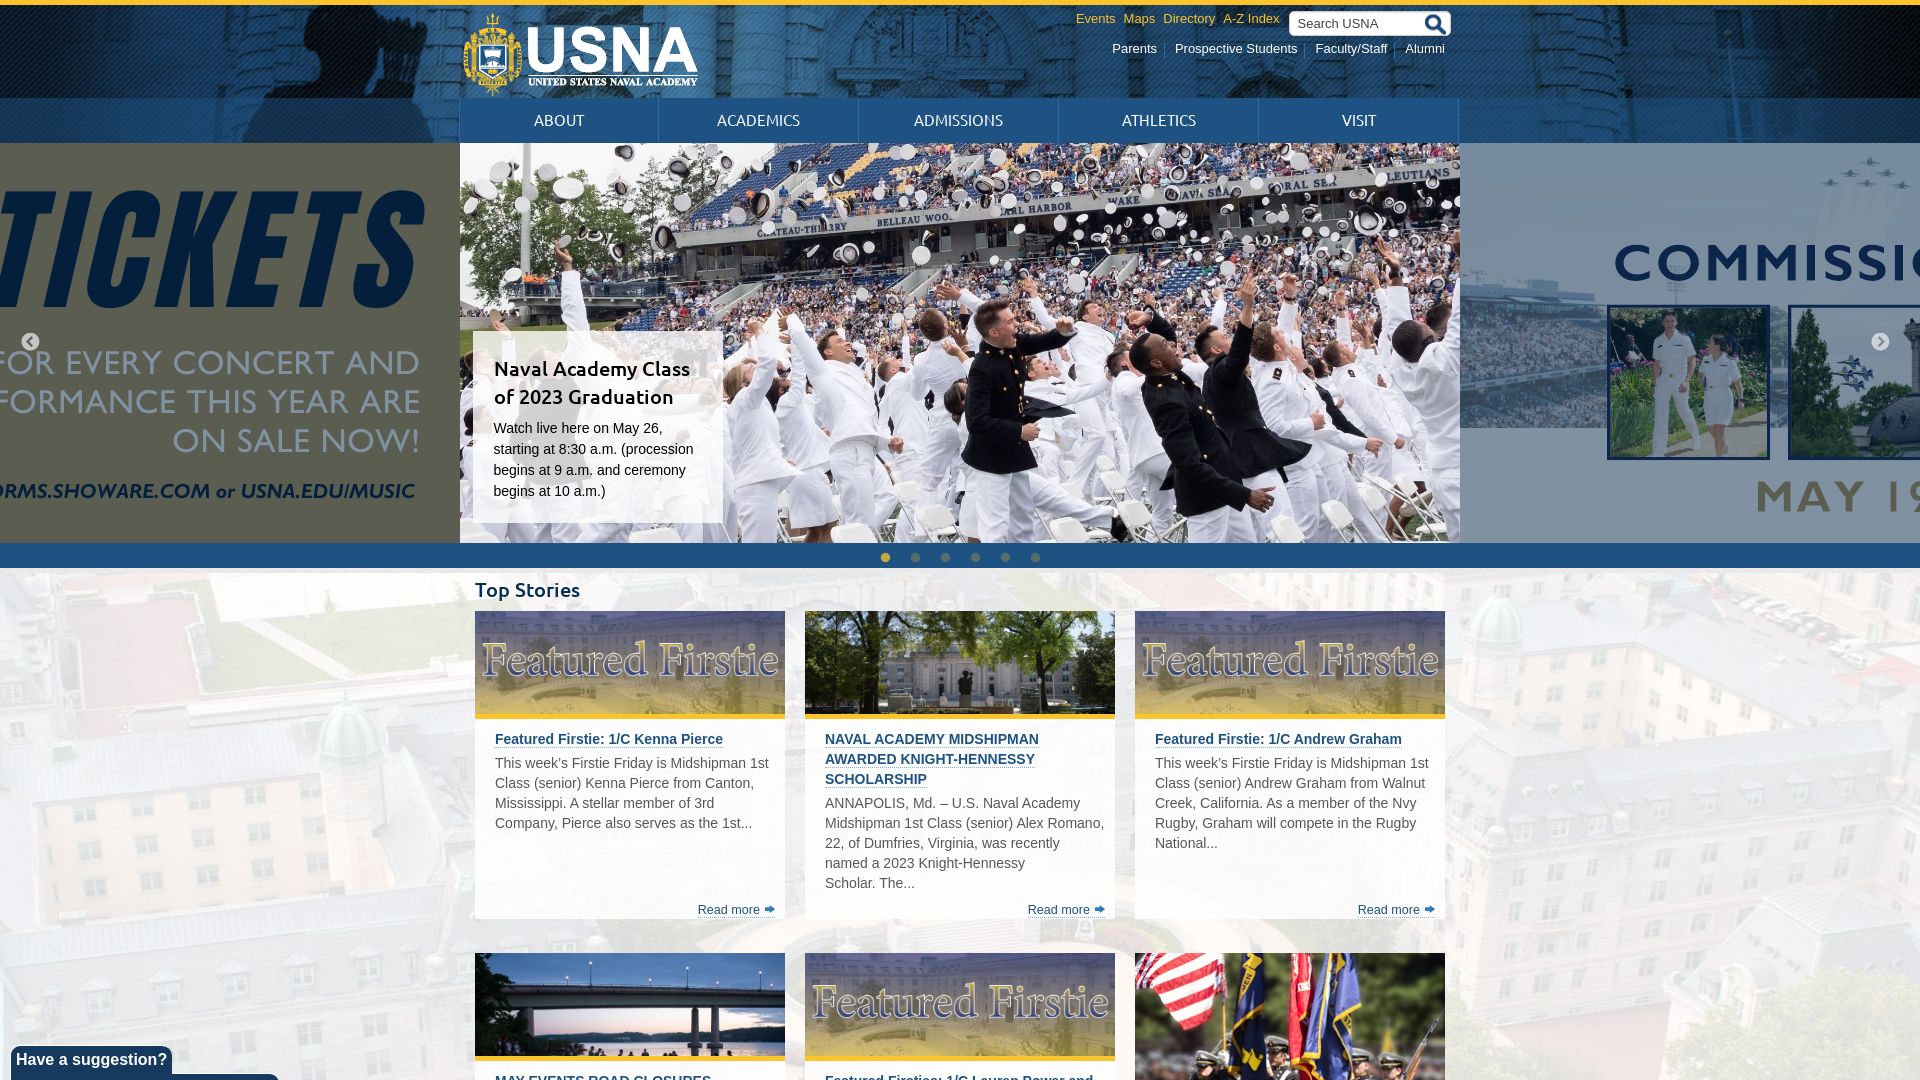 Website status usna.edu is   ONLINE